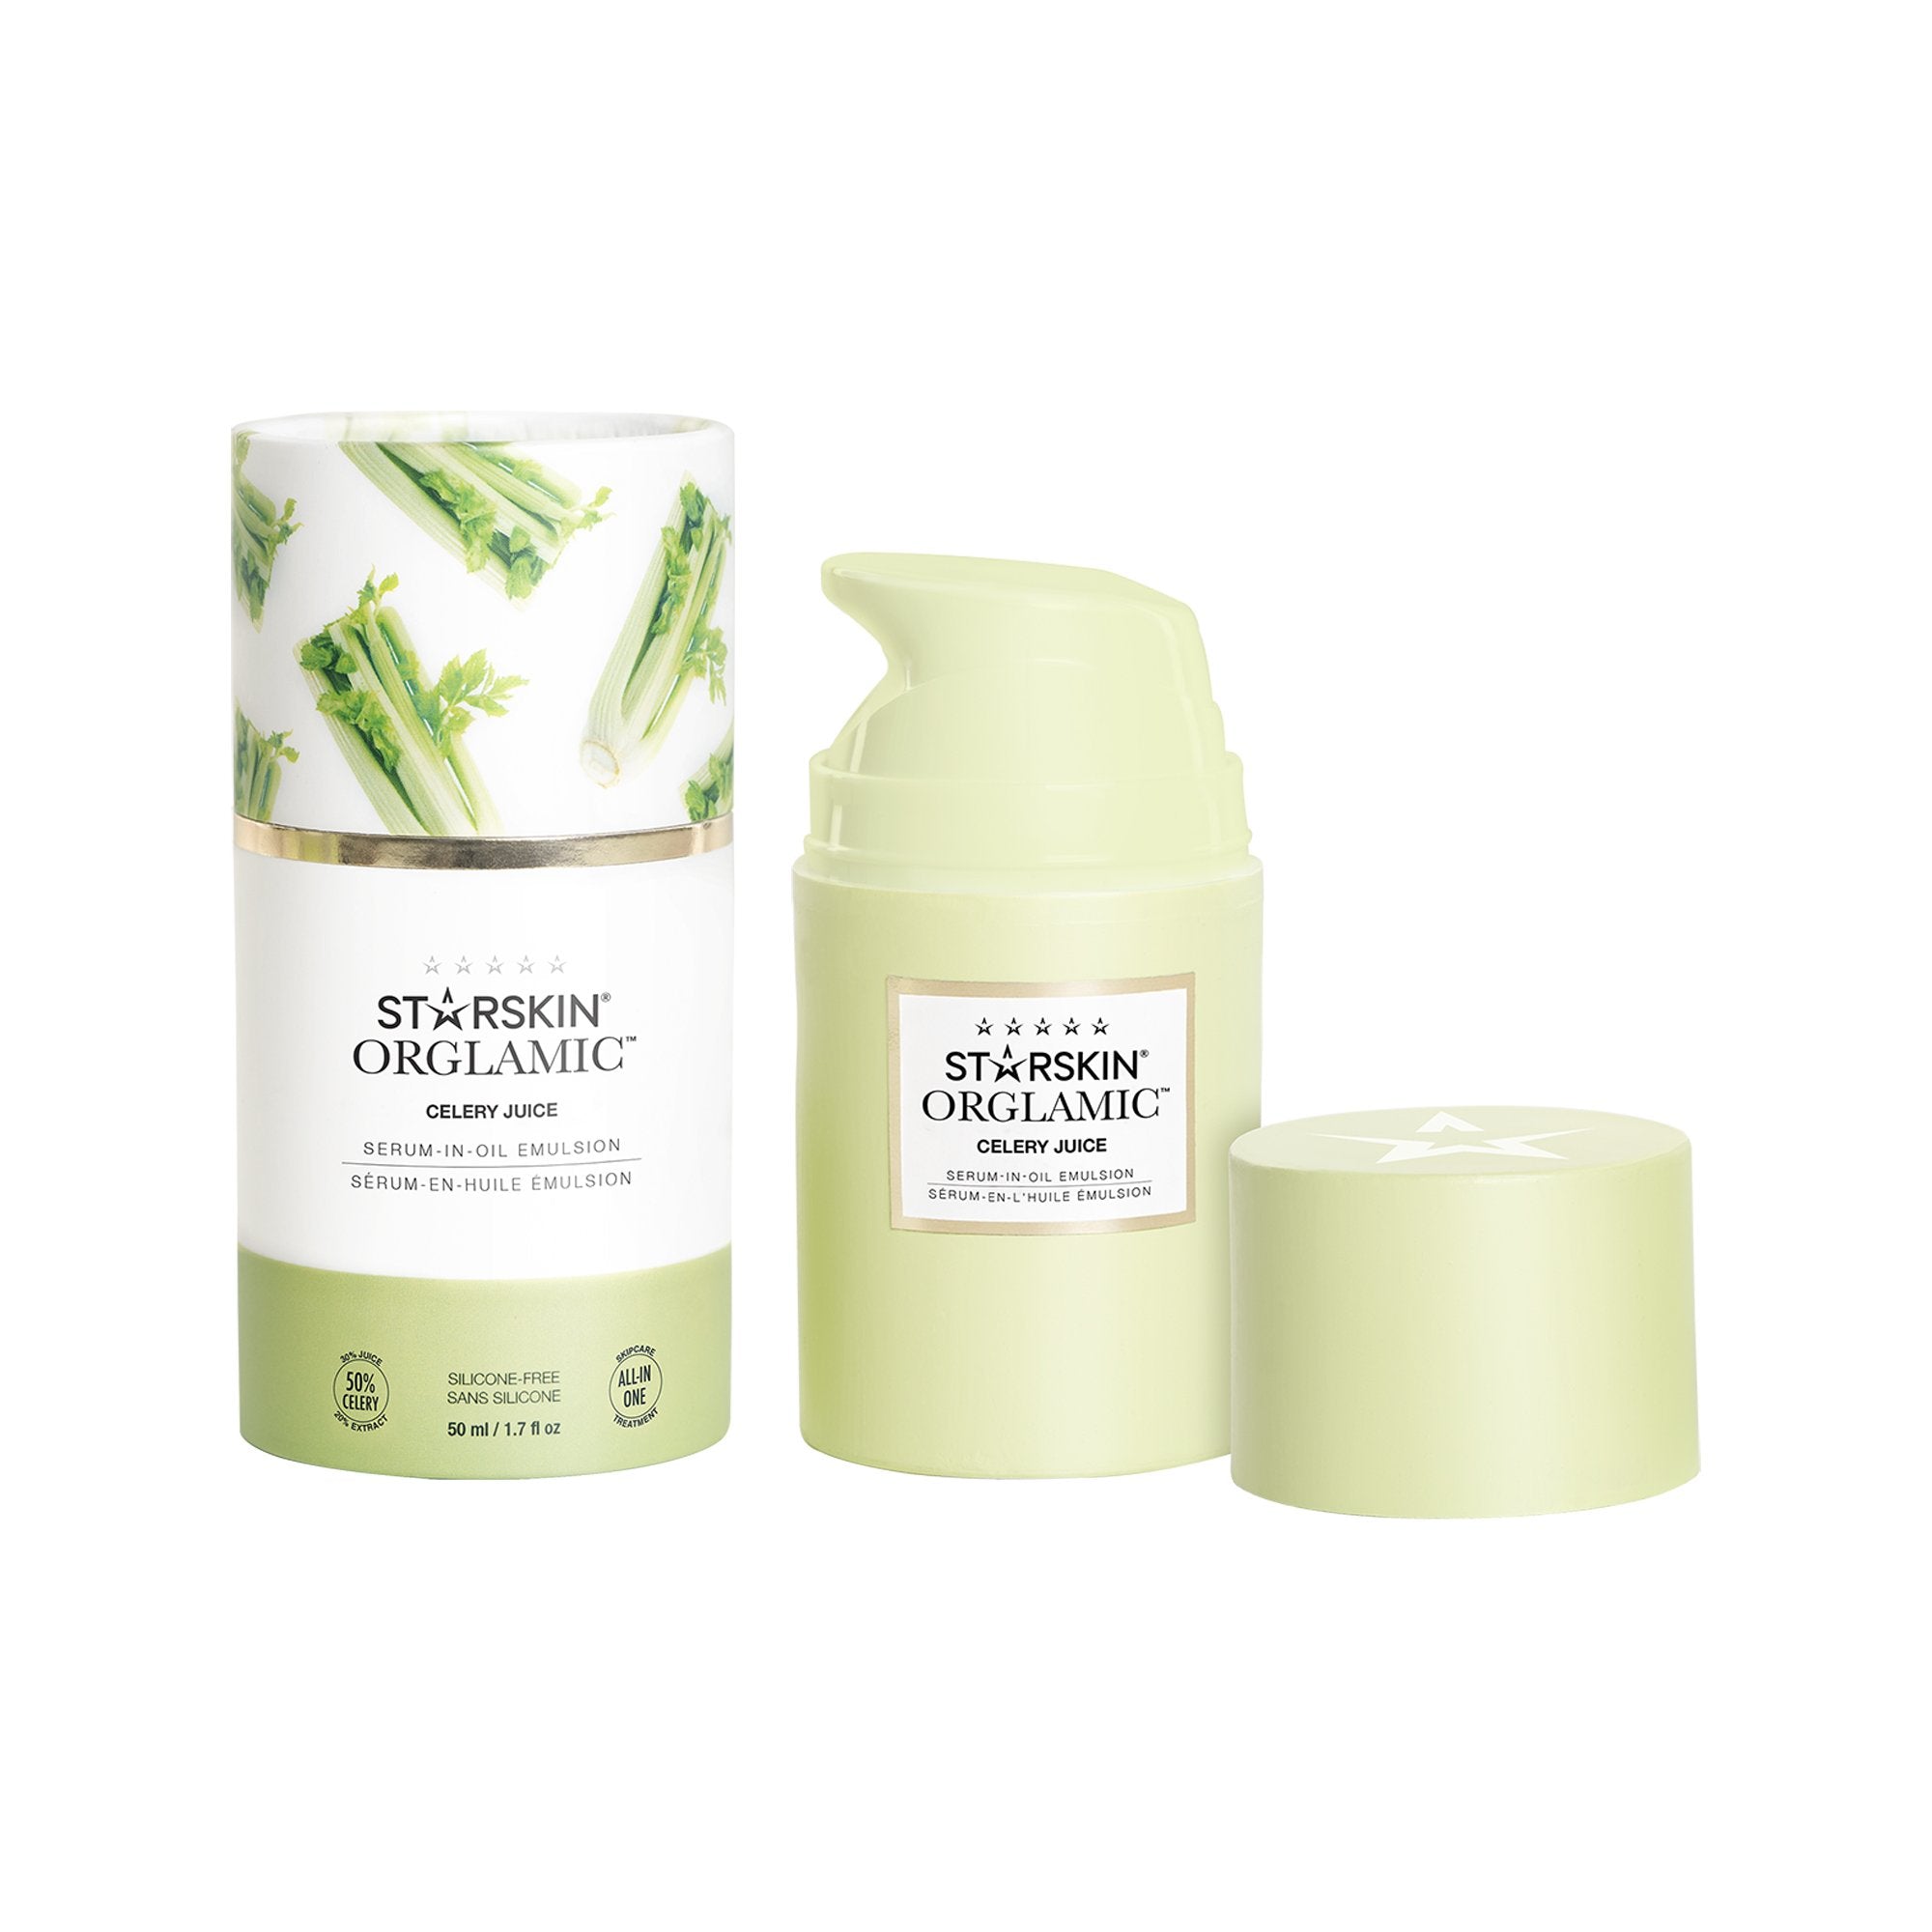 STARSKIN Orglamic Celery Juice Serum-In-Oil Emulsion 50ml Grace Beauty